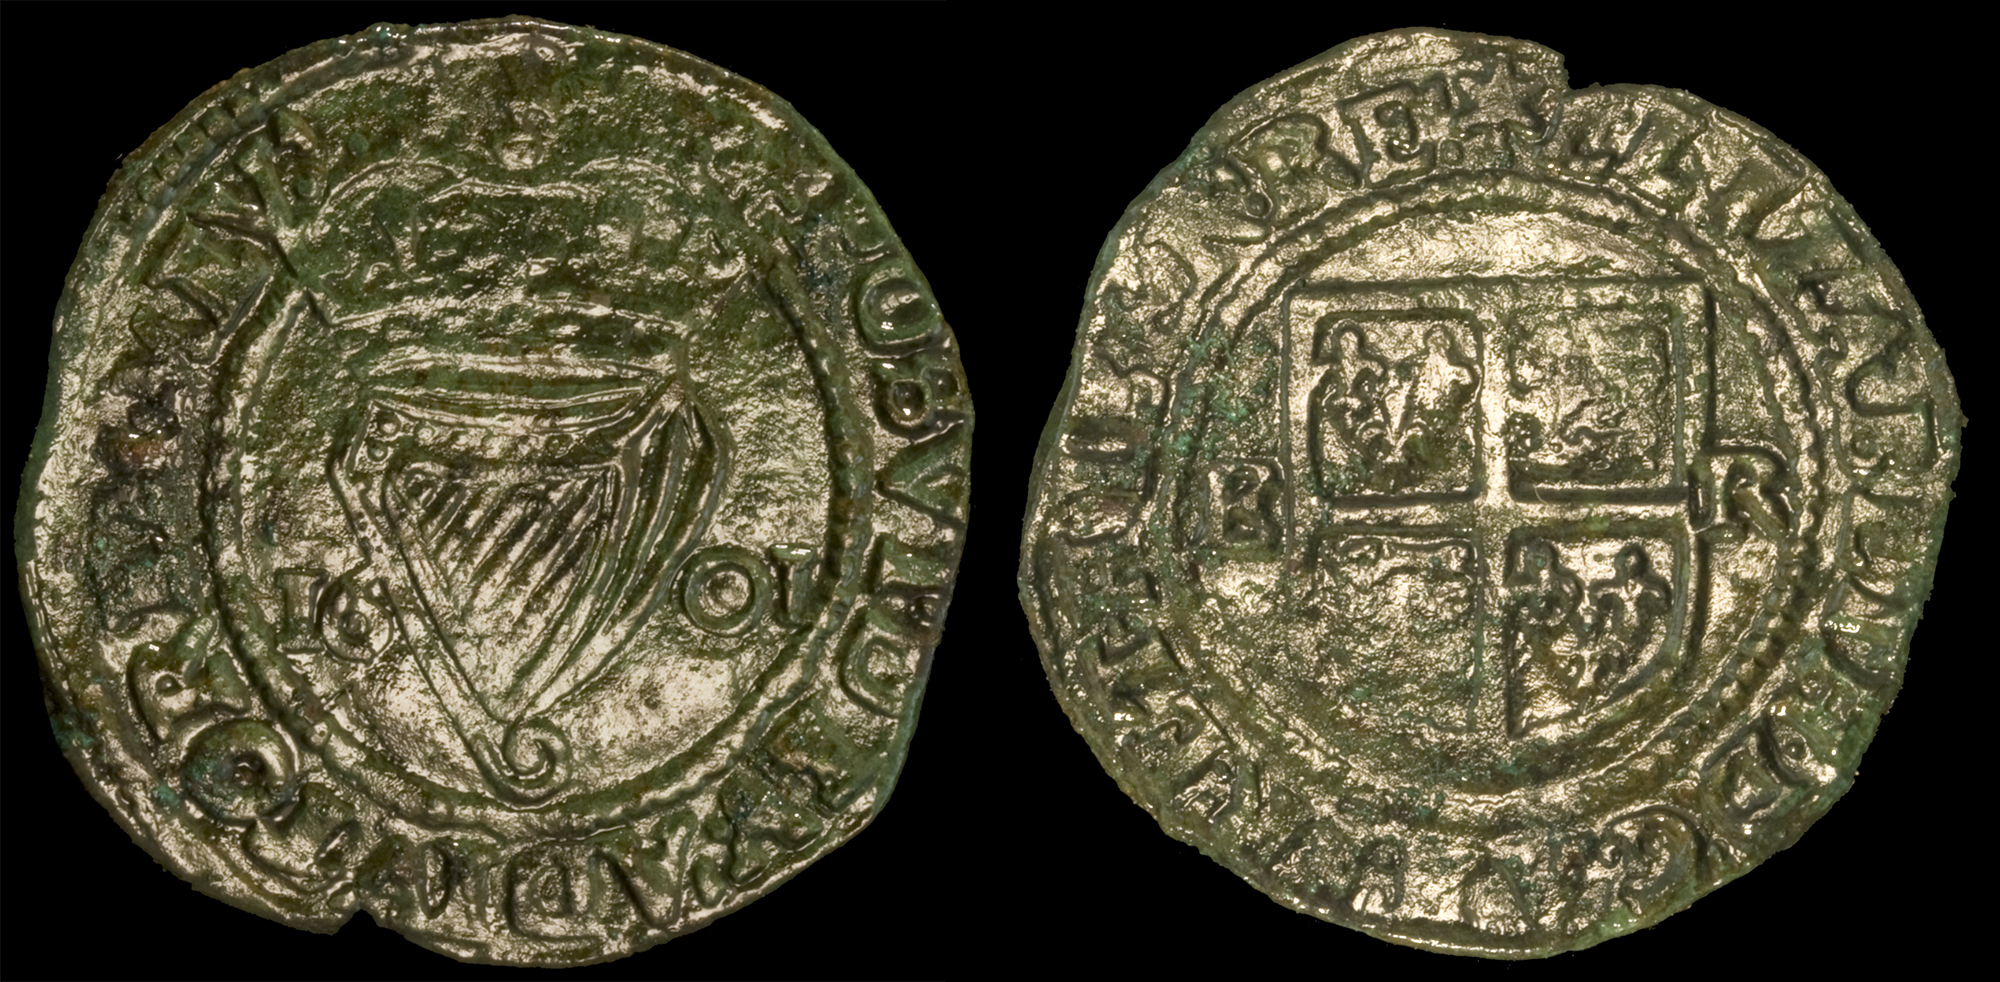 Copper alloy coin